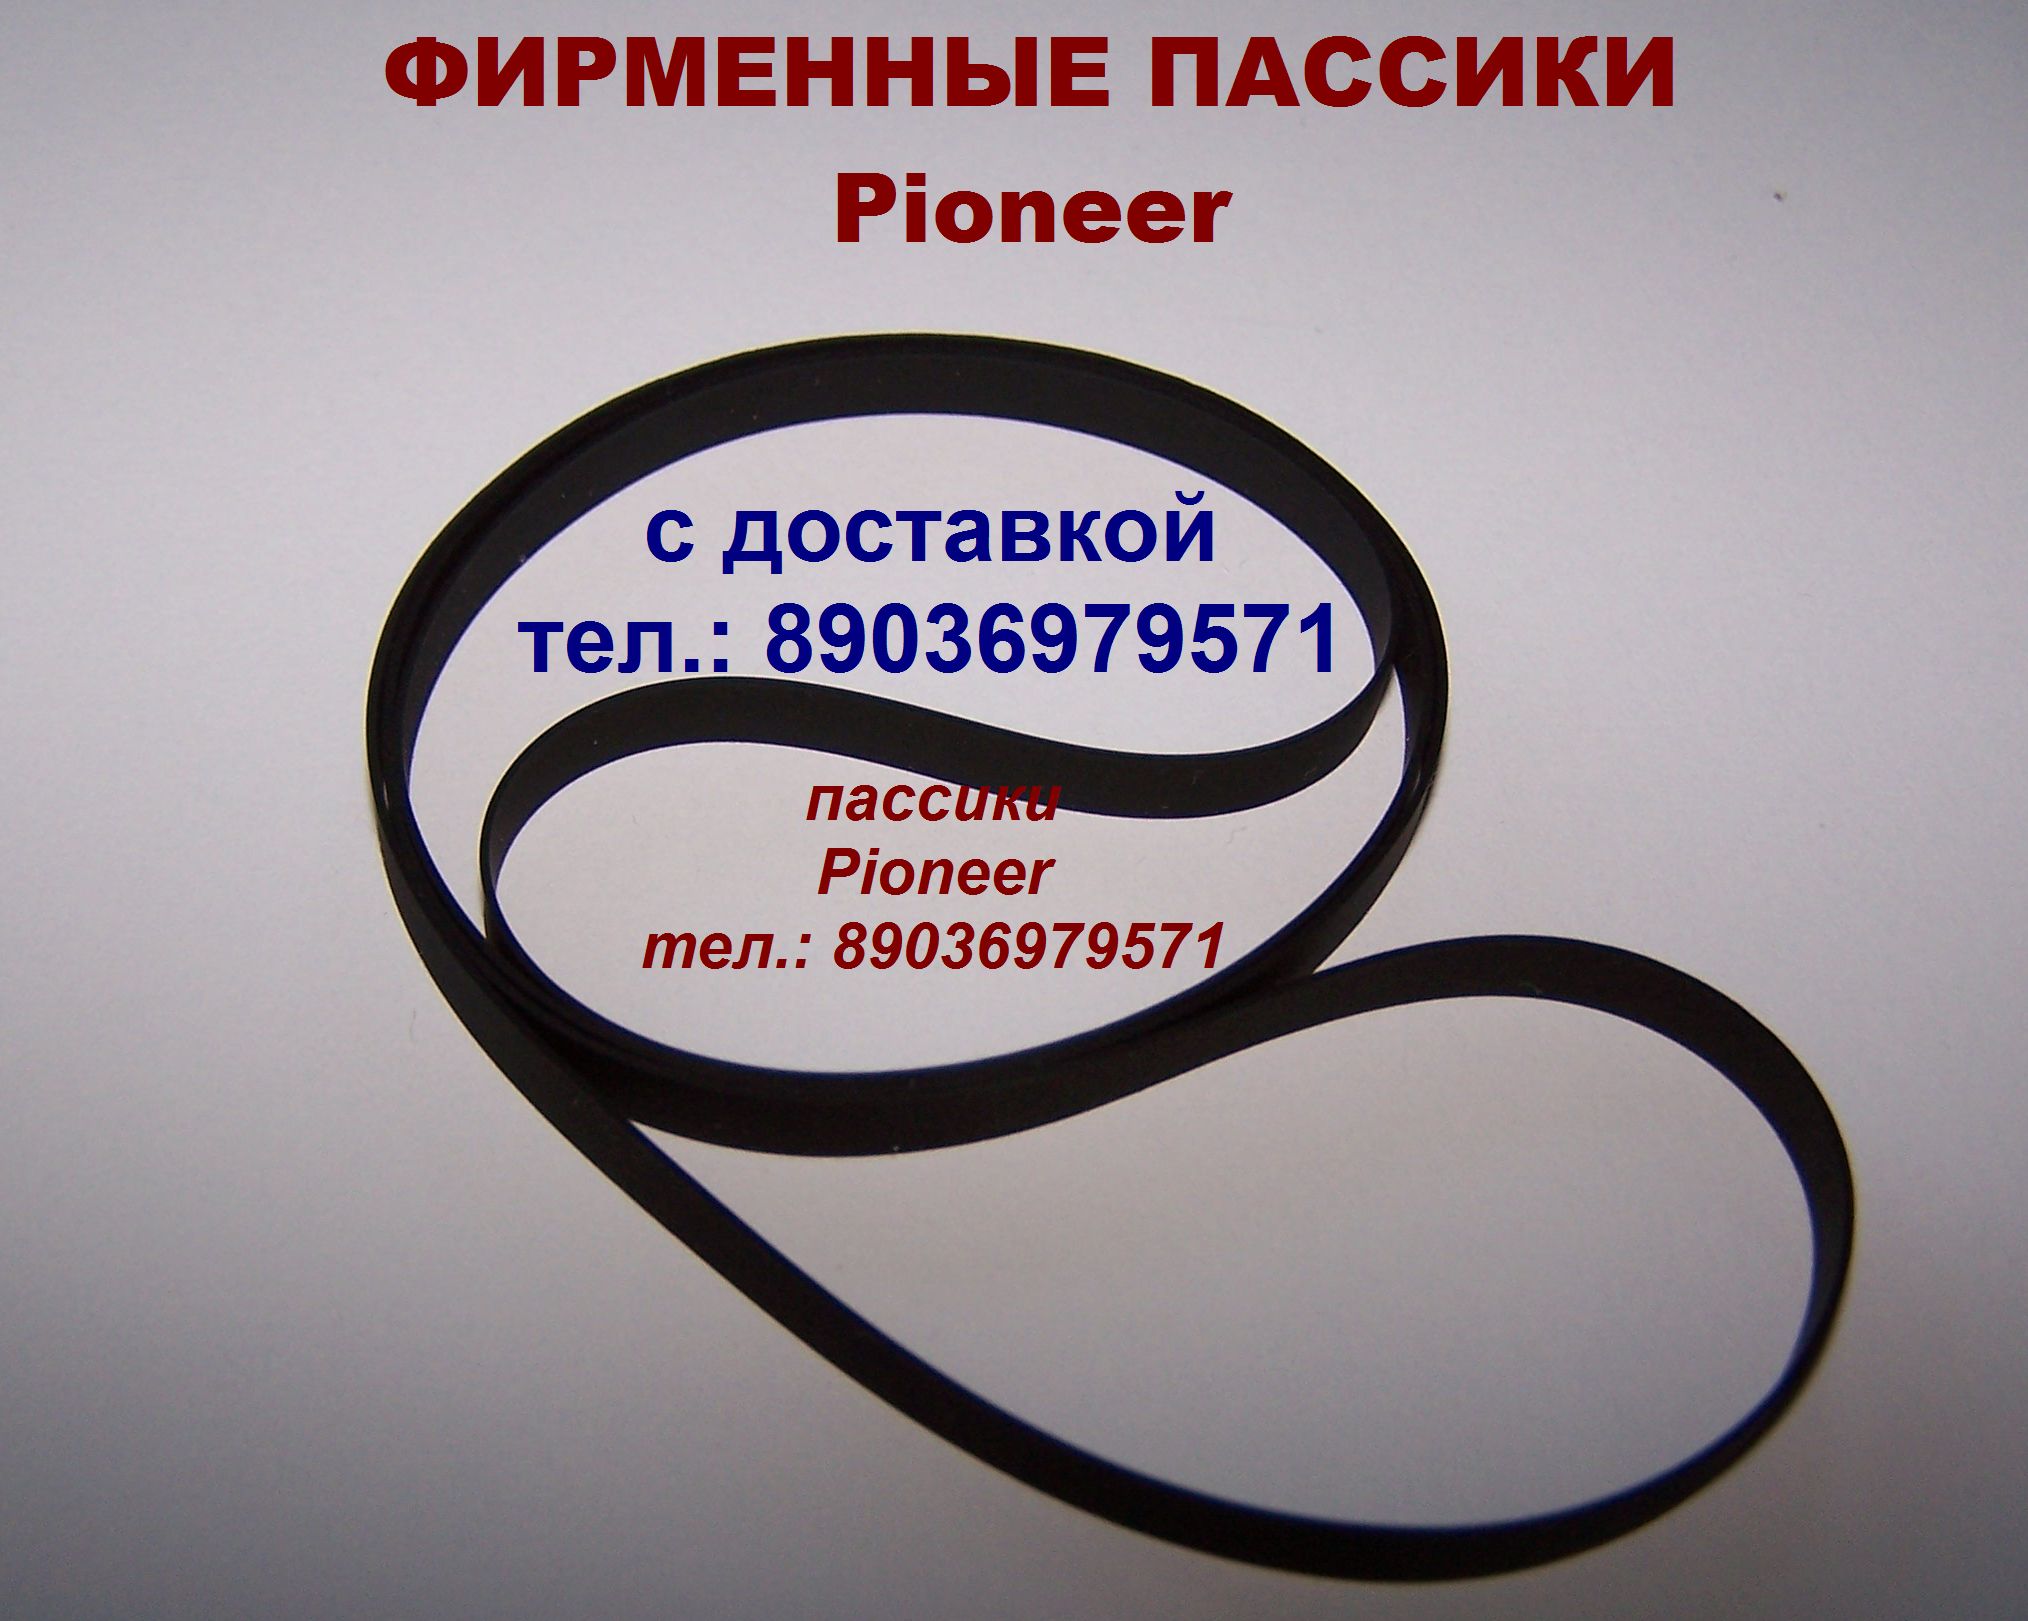 sharp technics pioneer пассики проигрывателей винила в городе Москва, фото 3, телефон продавца: +7 (903) 697-95-71